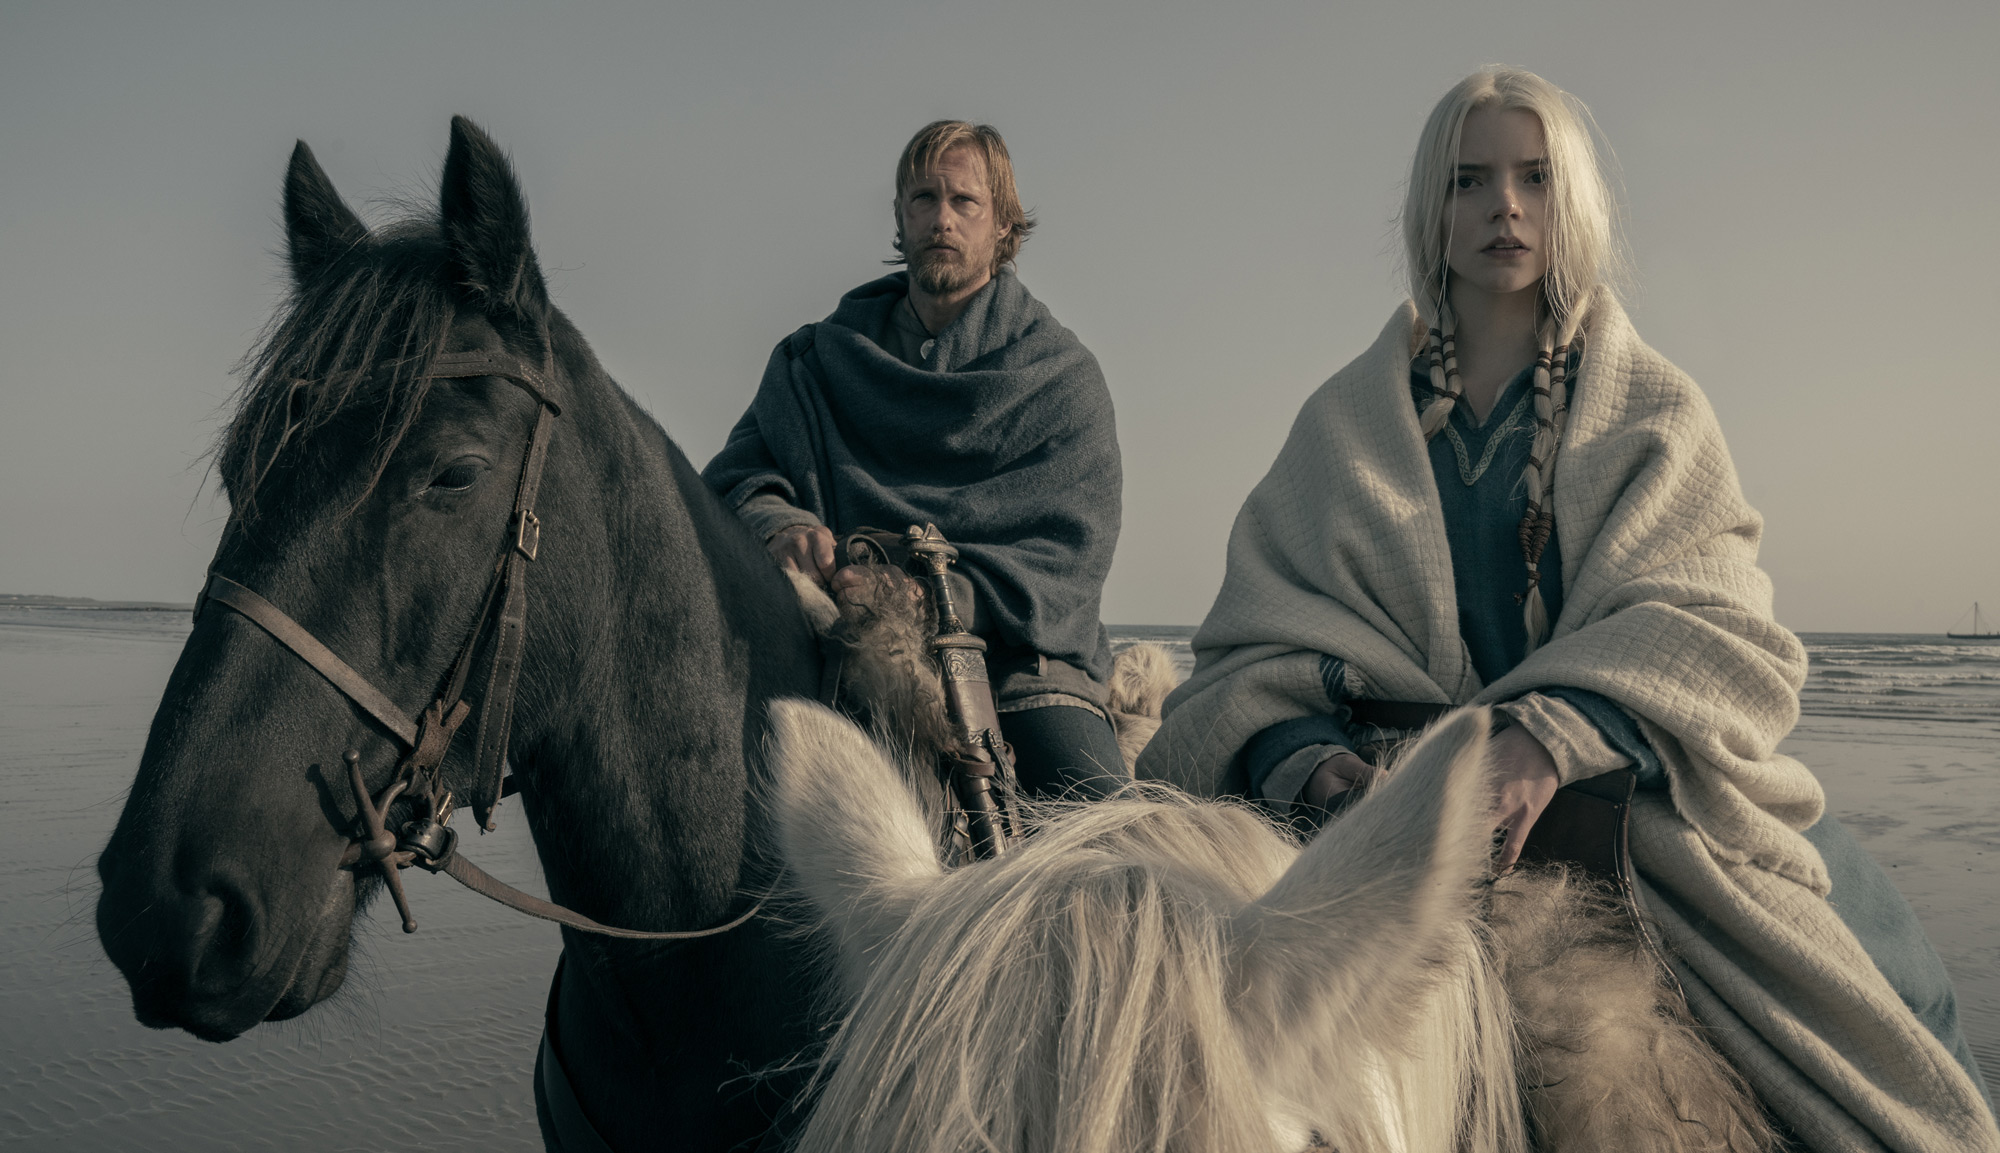 Alexander Skarsgård and Anya Taylor-Joy in "The Northman"